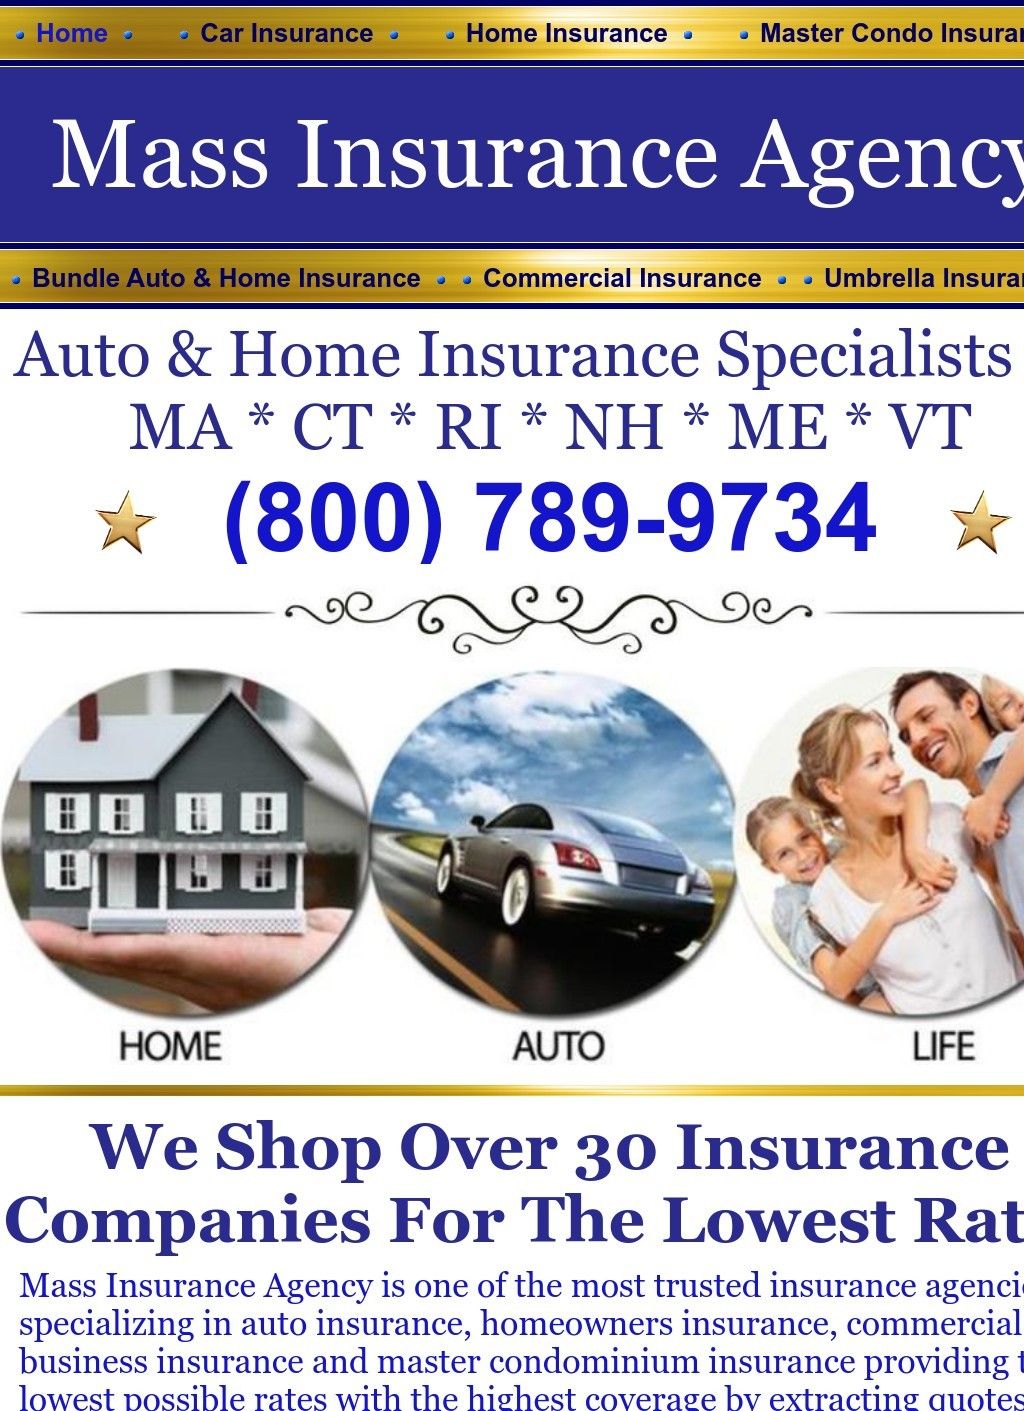 Bundle Auto & Home Insurance For Savings